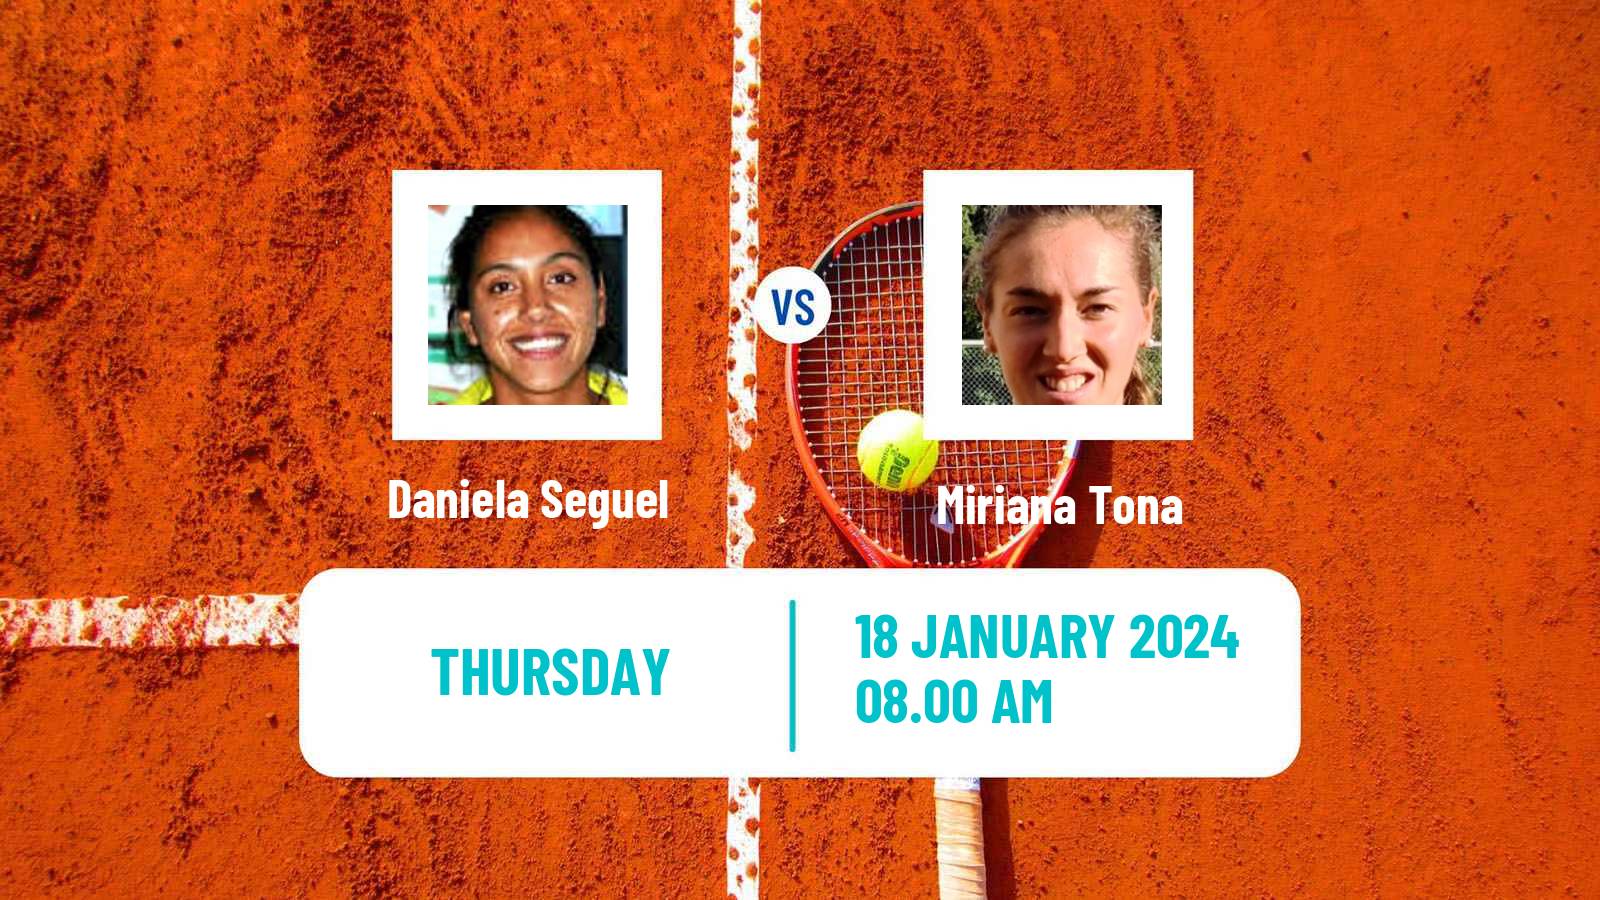 Tennis ITF W35 Buenos Aires Women Daniela Seguel - Miriana Tona